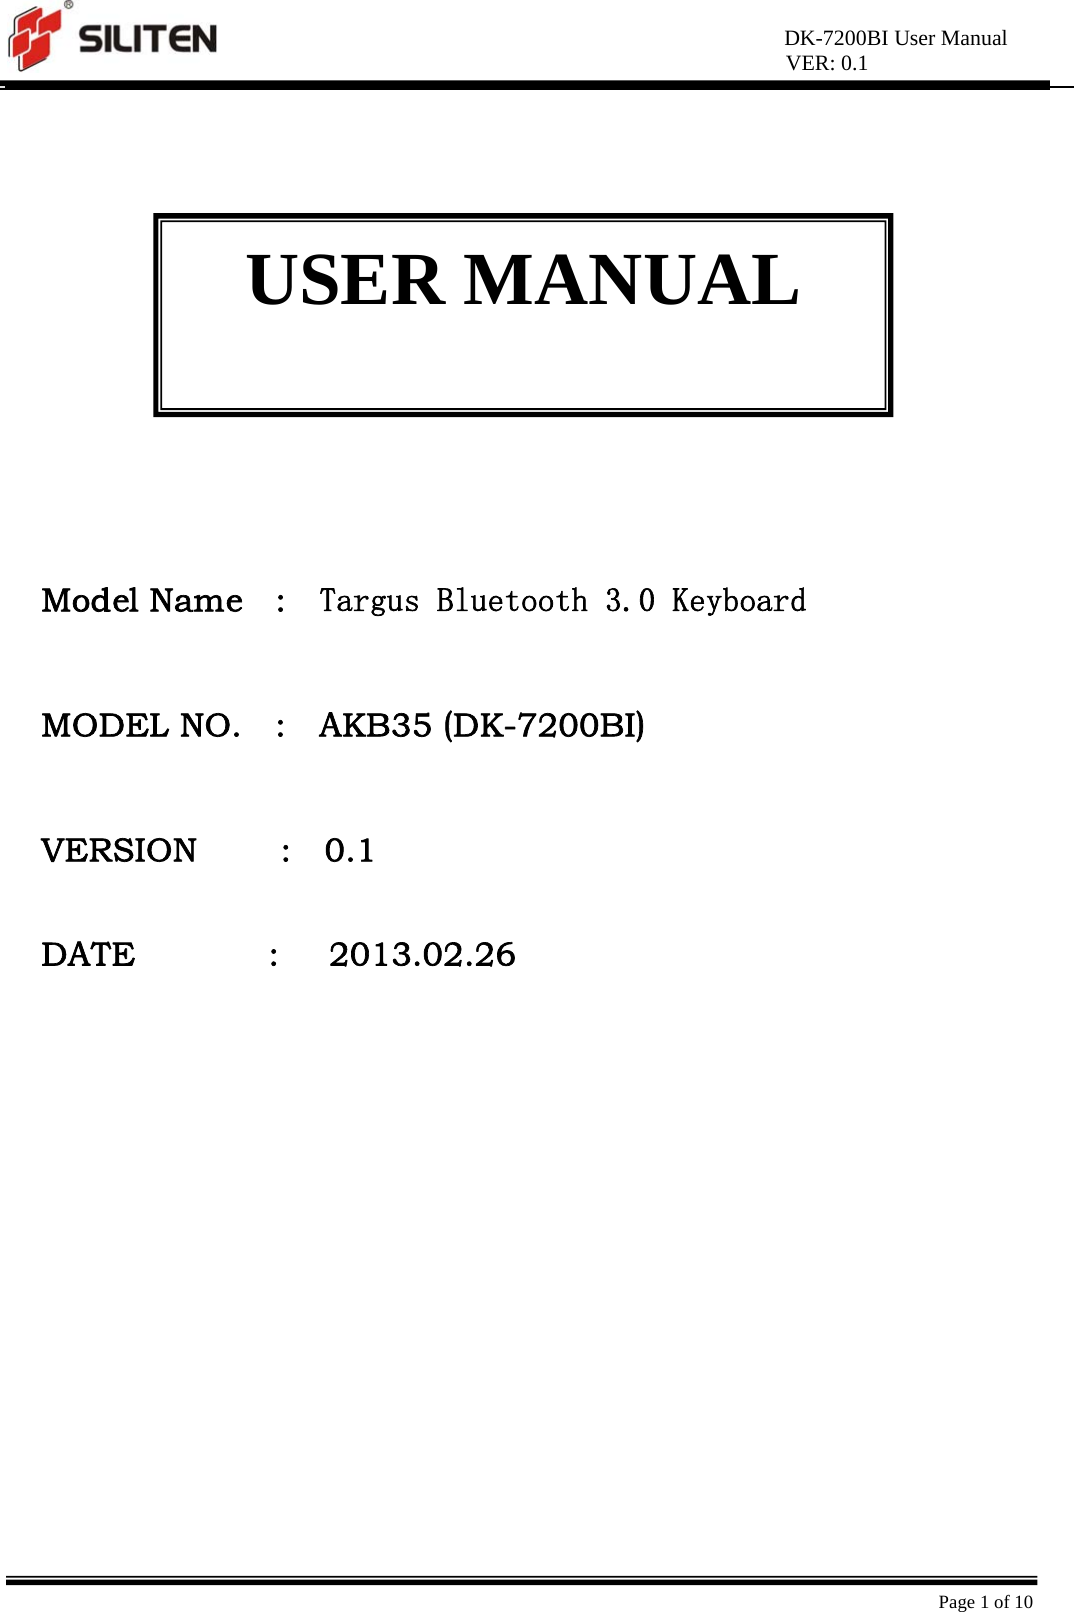 DK-7200BI User Manual VER: 0.1  Page 1 of 10              Model Name  :  Targus Bluetooth 3.0 Keyboard   MODEL NO.    :    AKB35 (DK-7200BI)                   VERSION     :  0.1   DATE        :   2013.02.26  USER MANUAL 